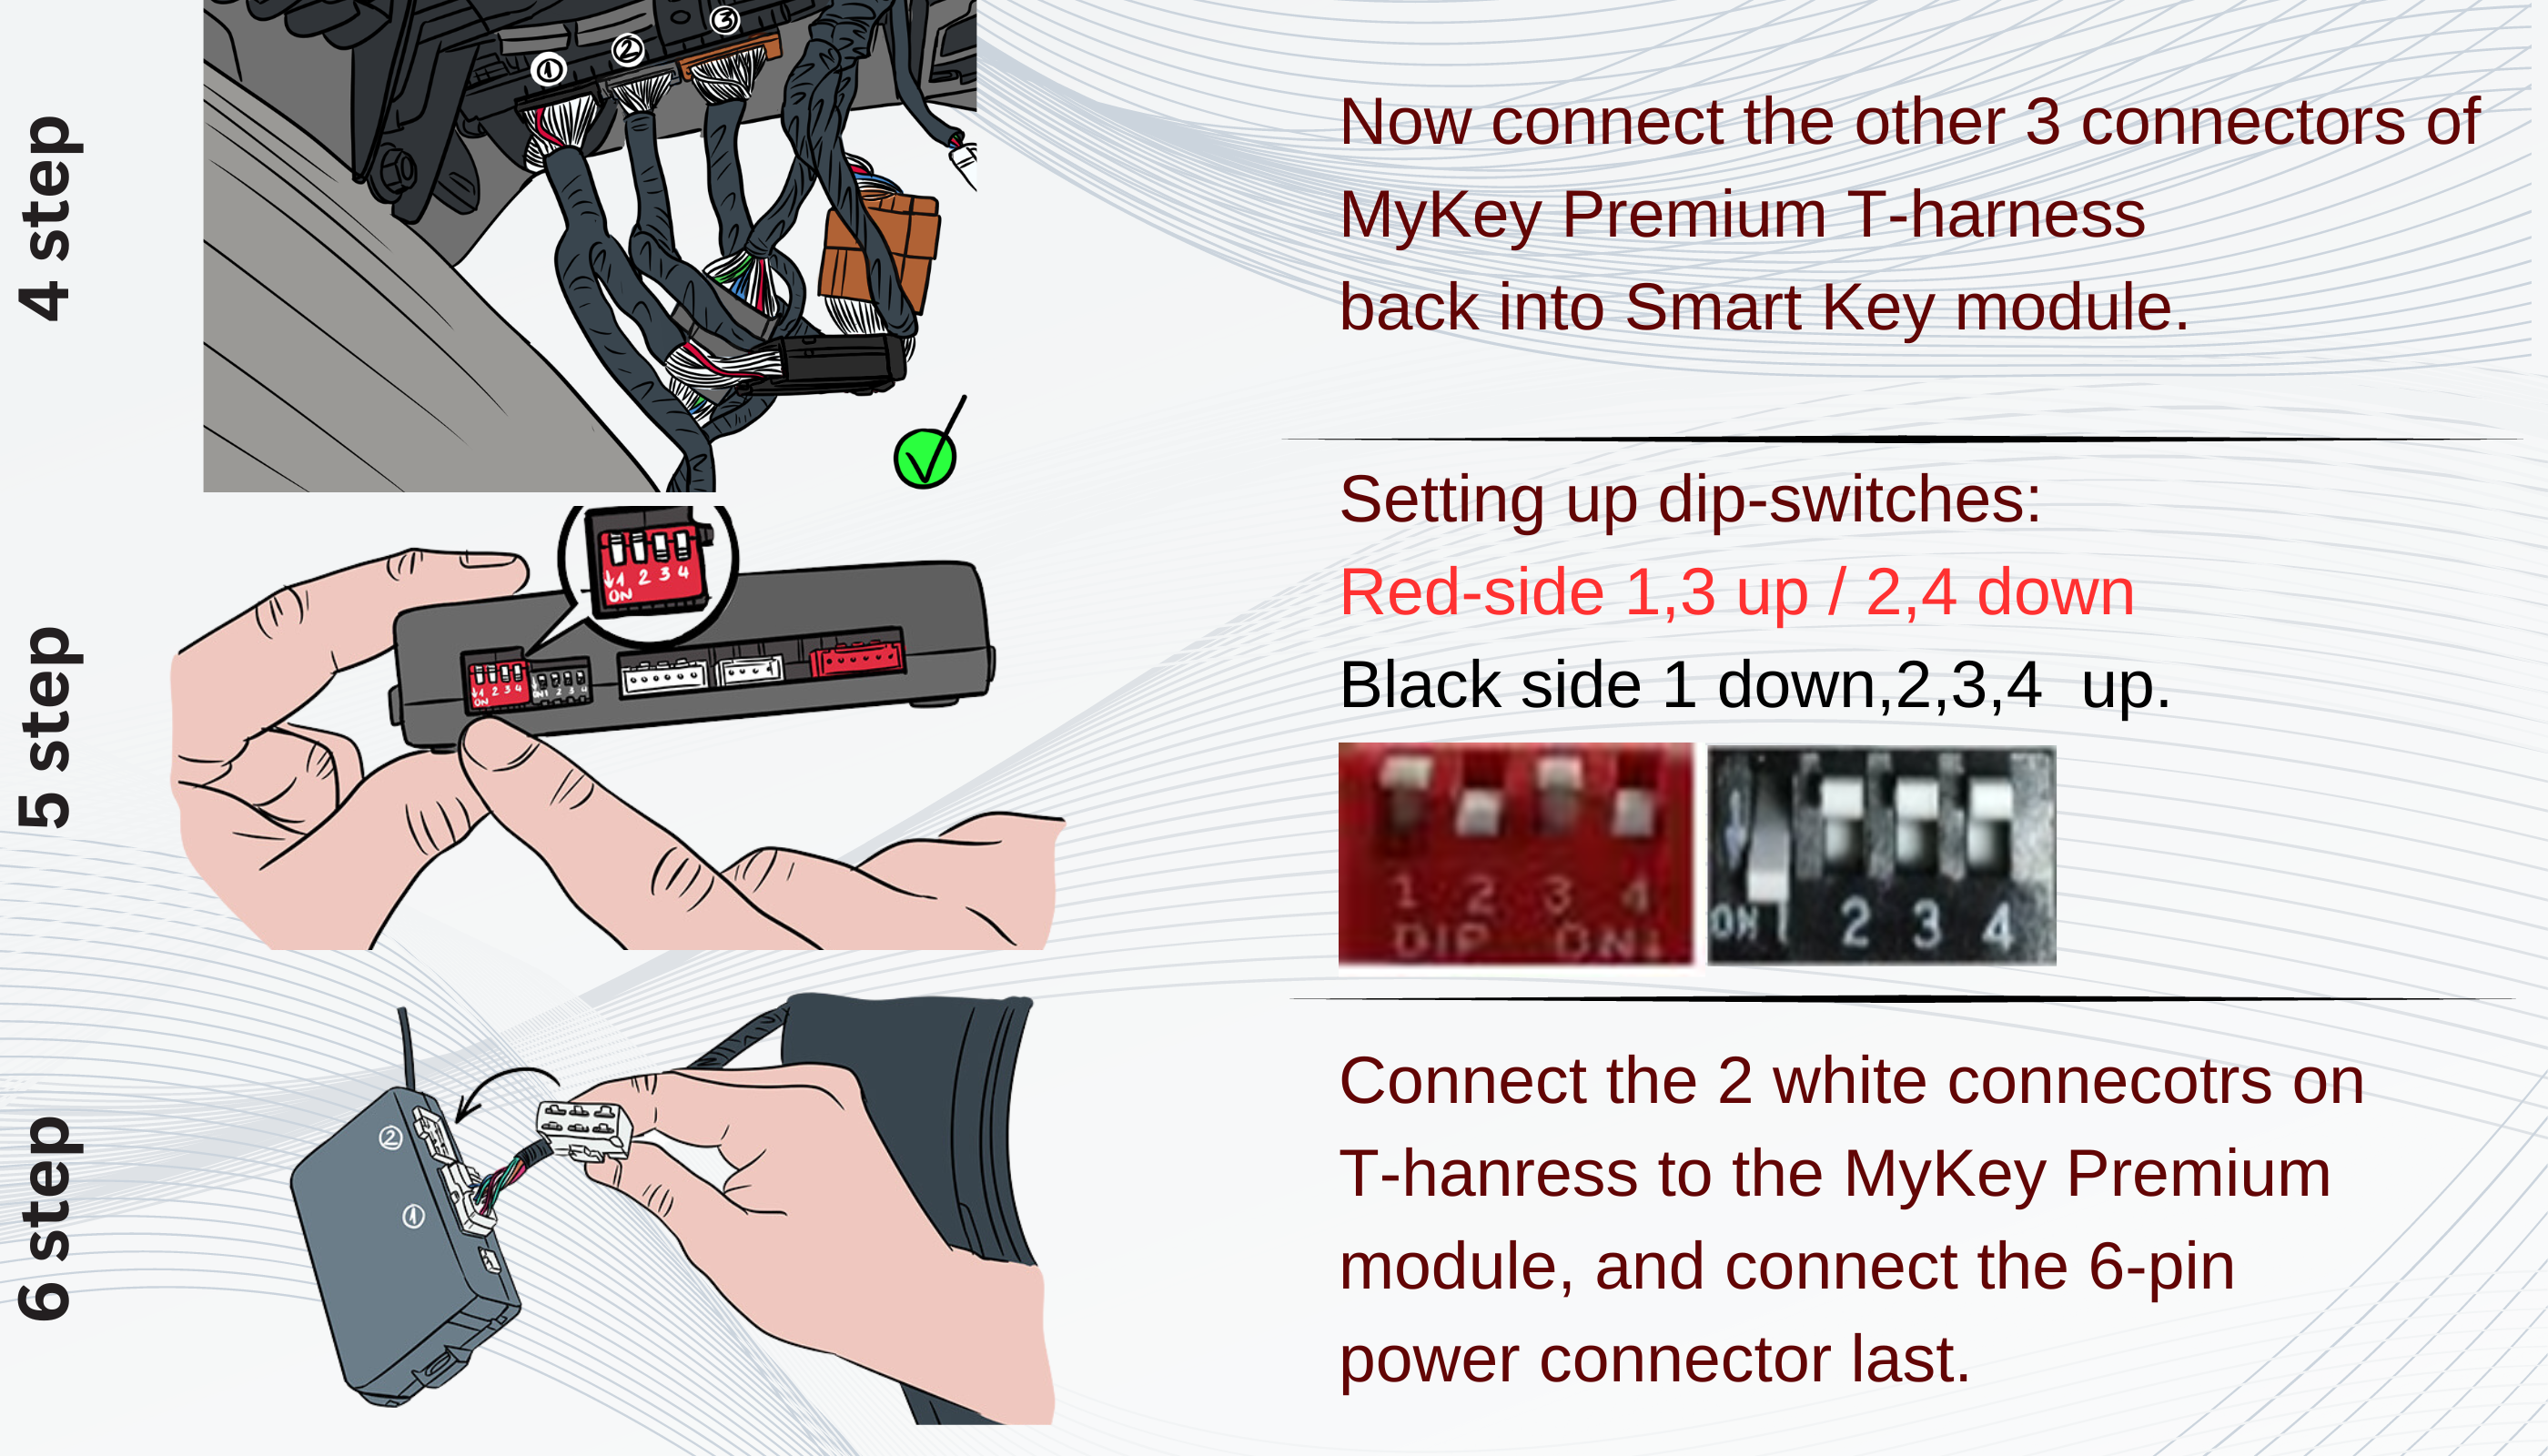 Hyundai Tucson Key Fob remote engine auto starter kit installation guide [MyKey Premium]